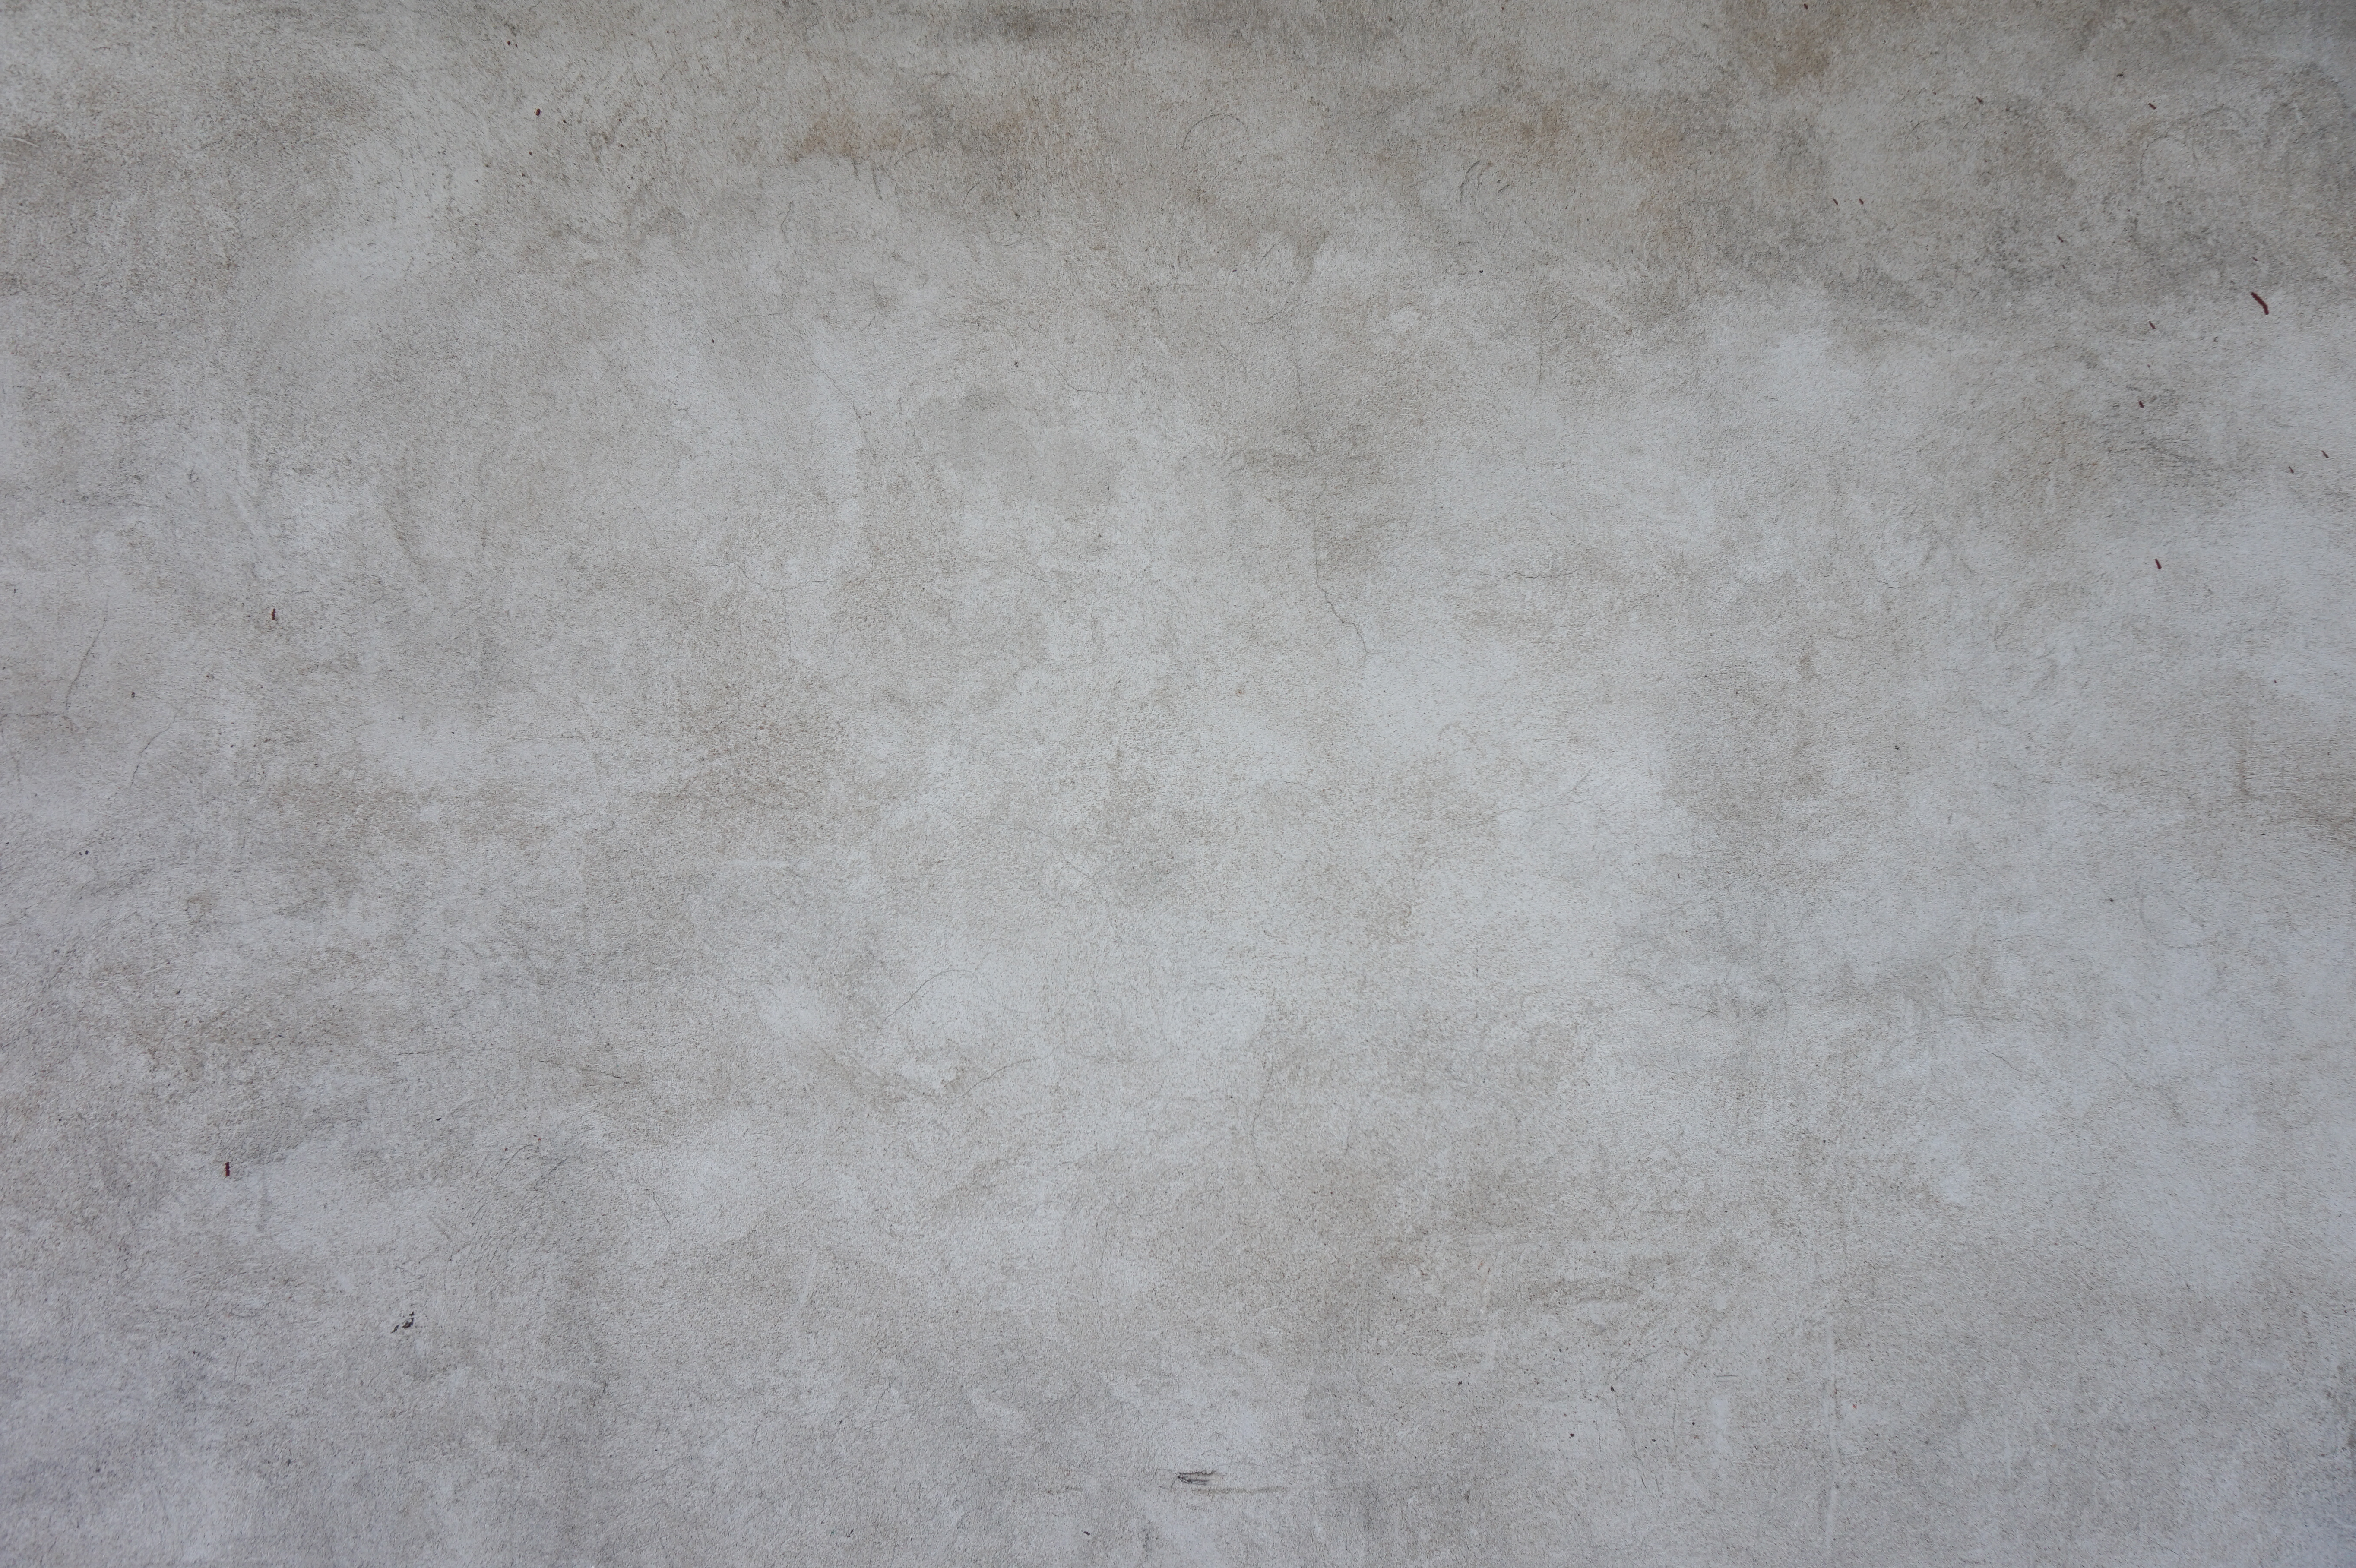 Plain concrete wall - Concrete - Texturify - Free textures